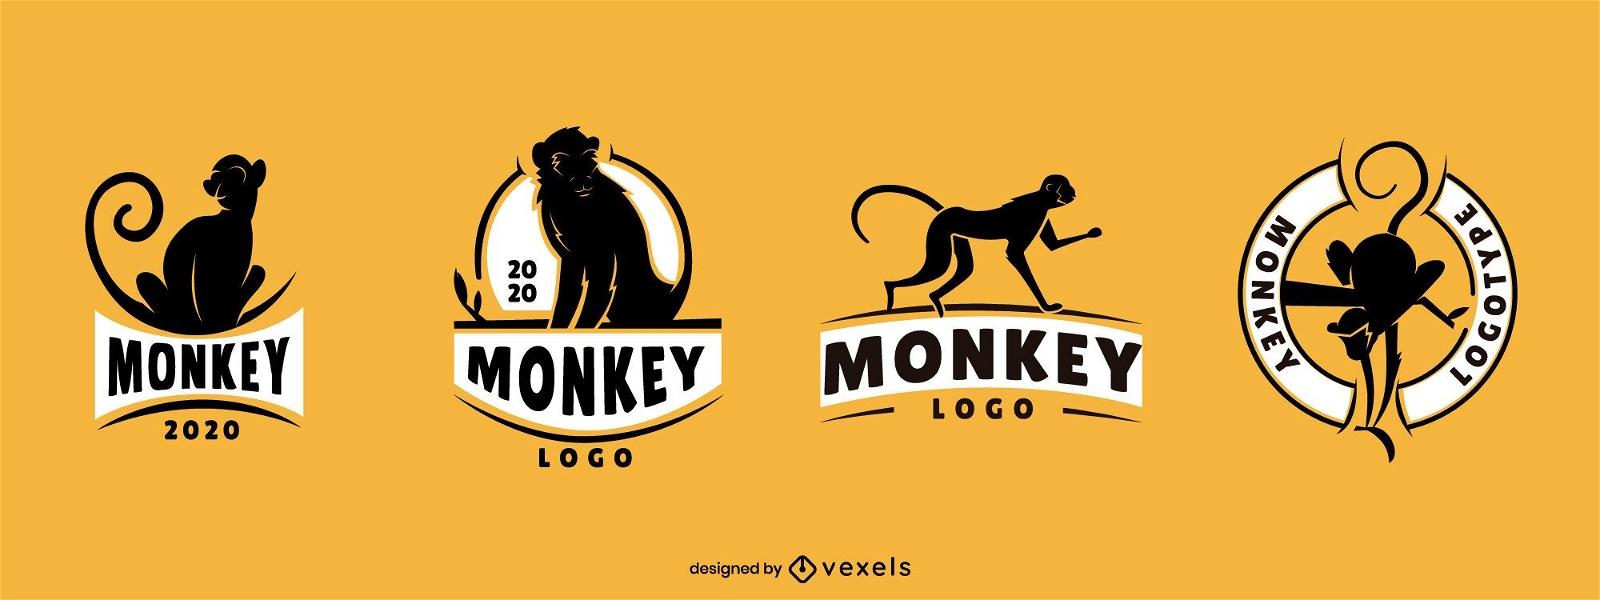 Entry #6 by EmZGraphics for Artwork for a logo/brand - Monkeys | Freelancer